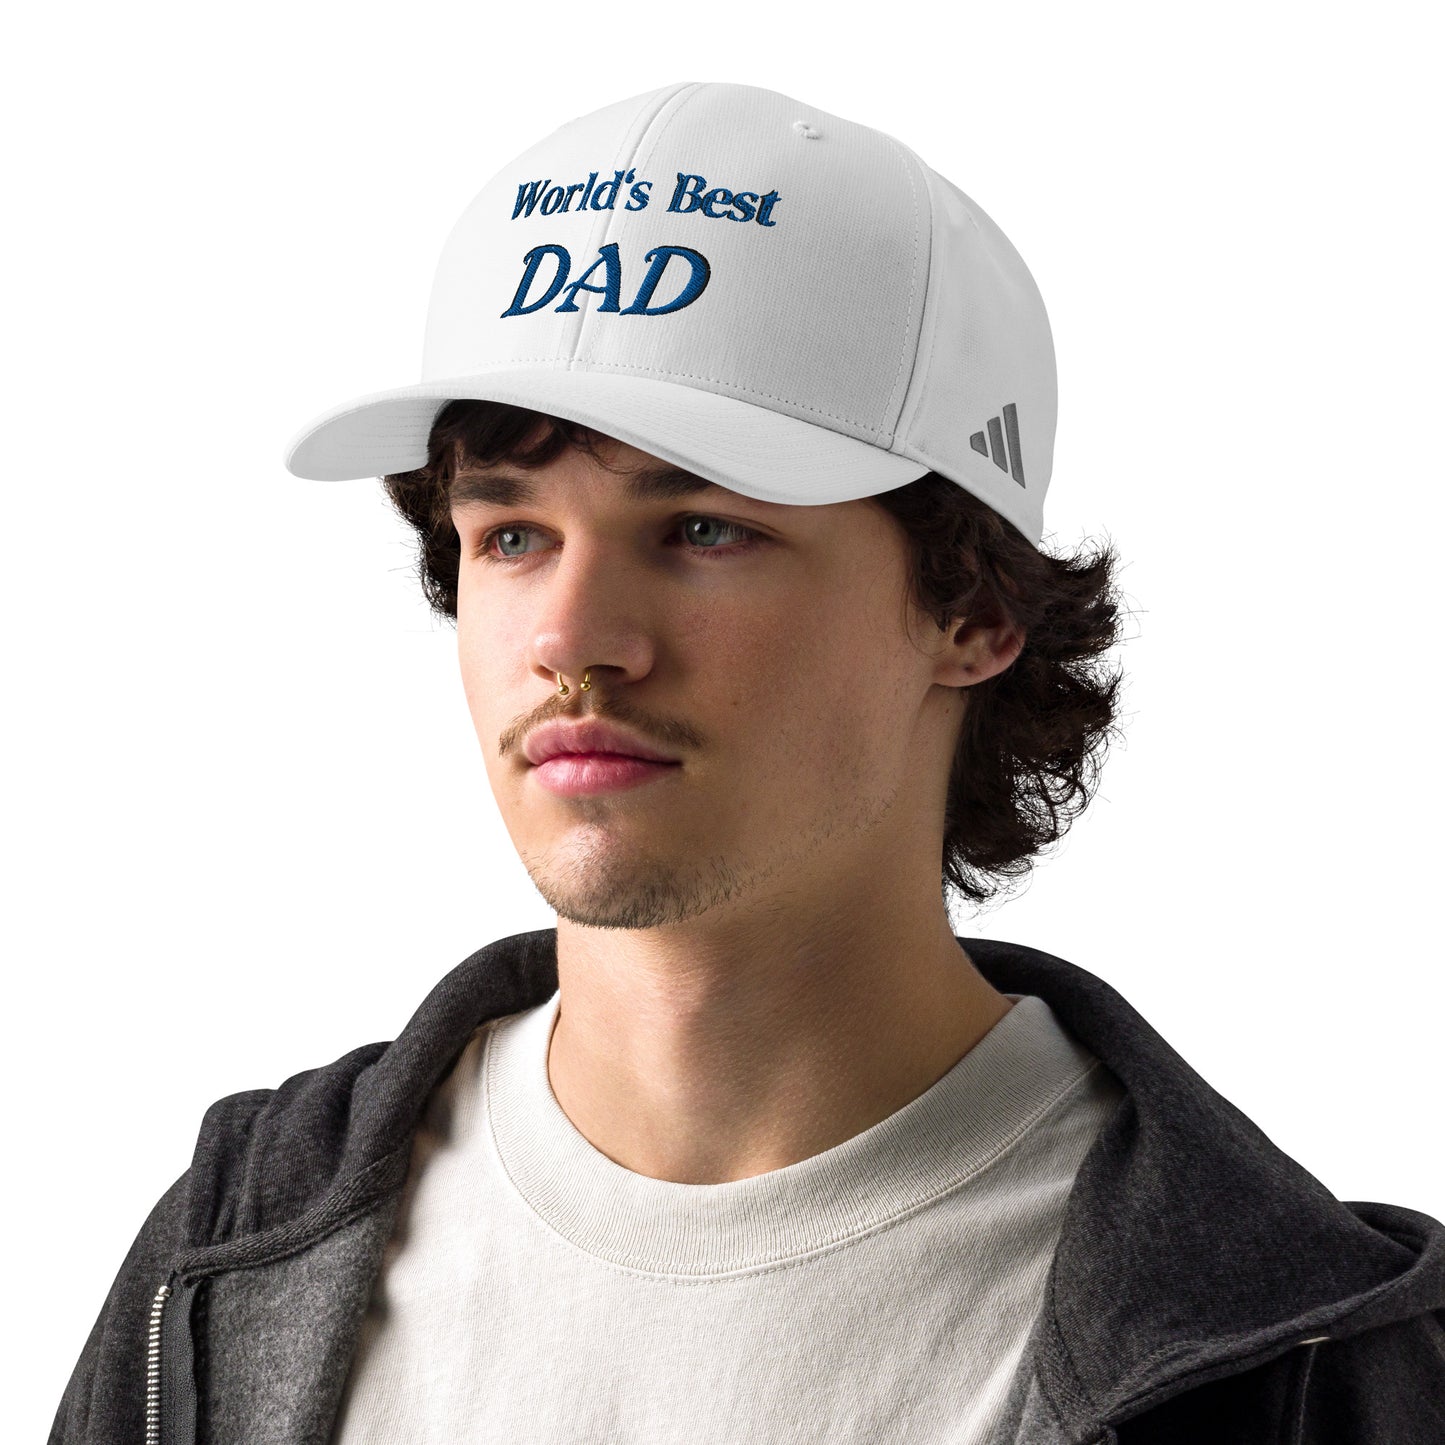 Adidas "World's best Dad" Performance Cap